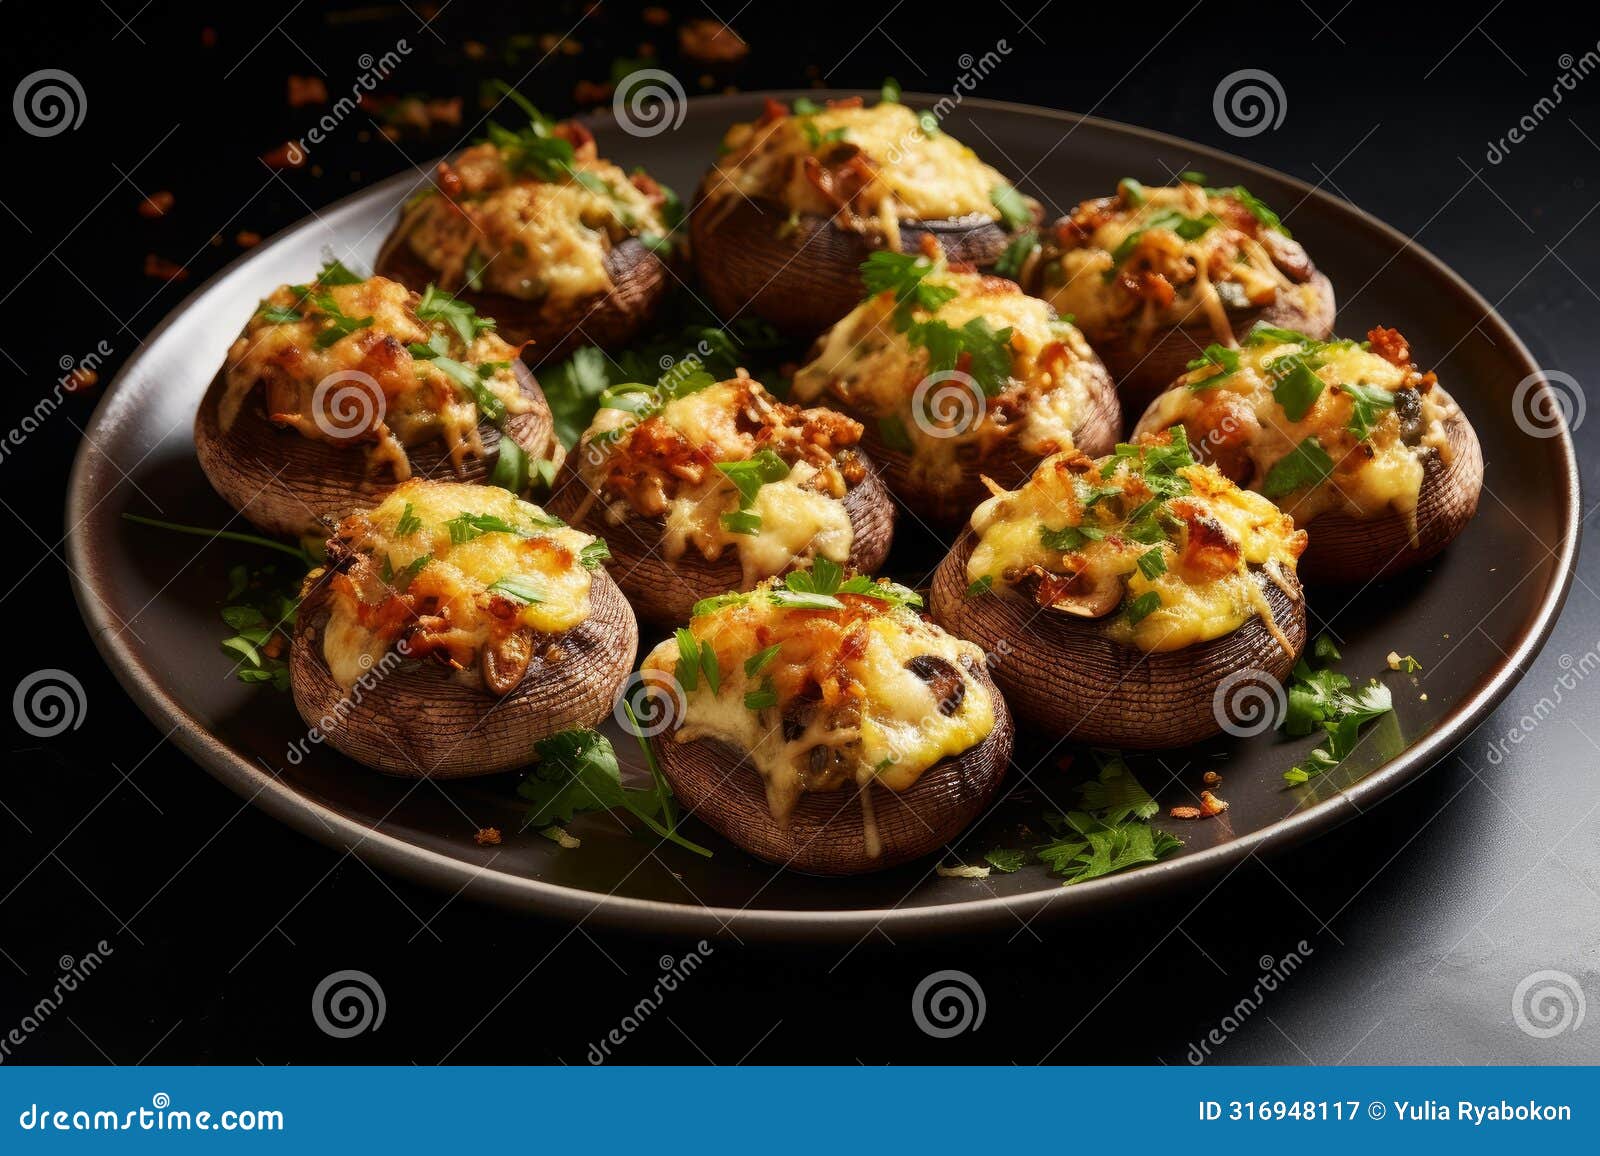 delectable stuffed mushrooms. generate ai